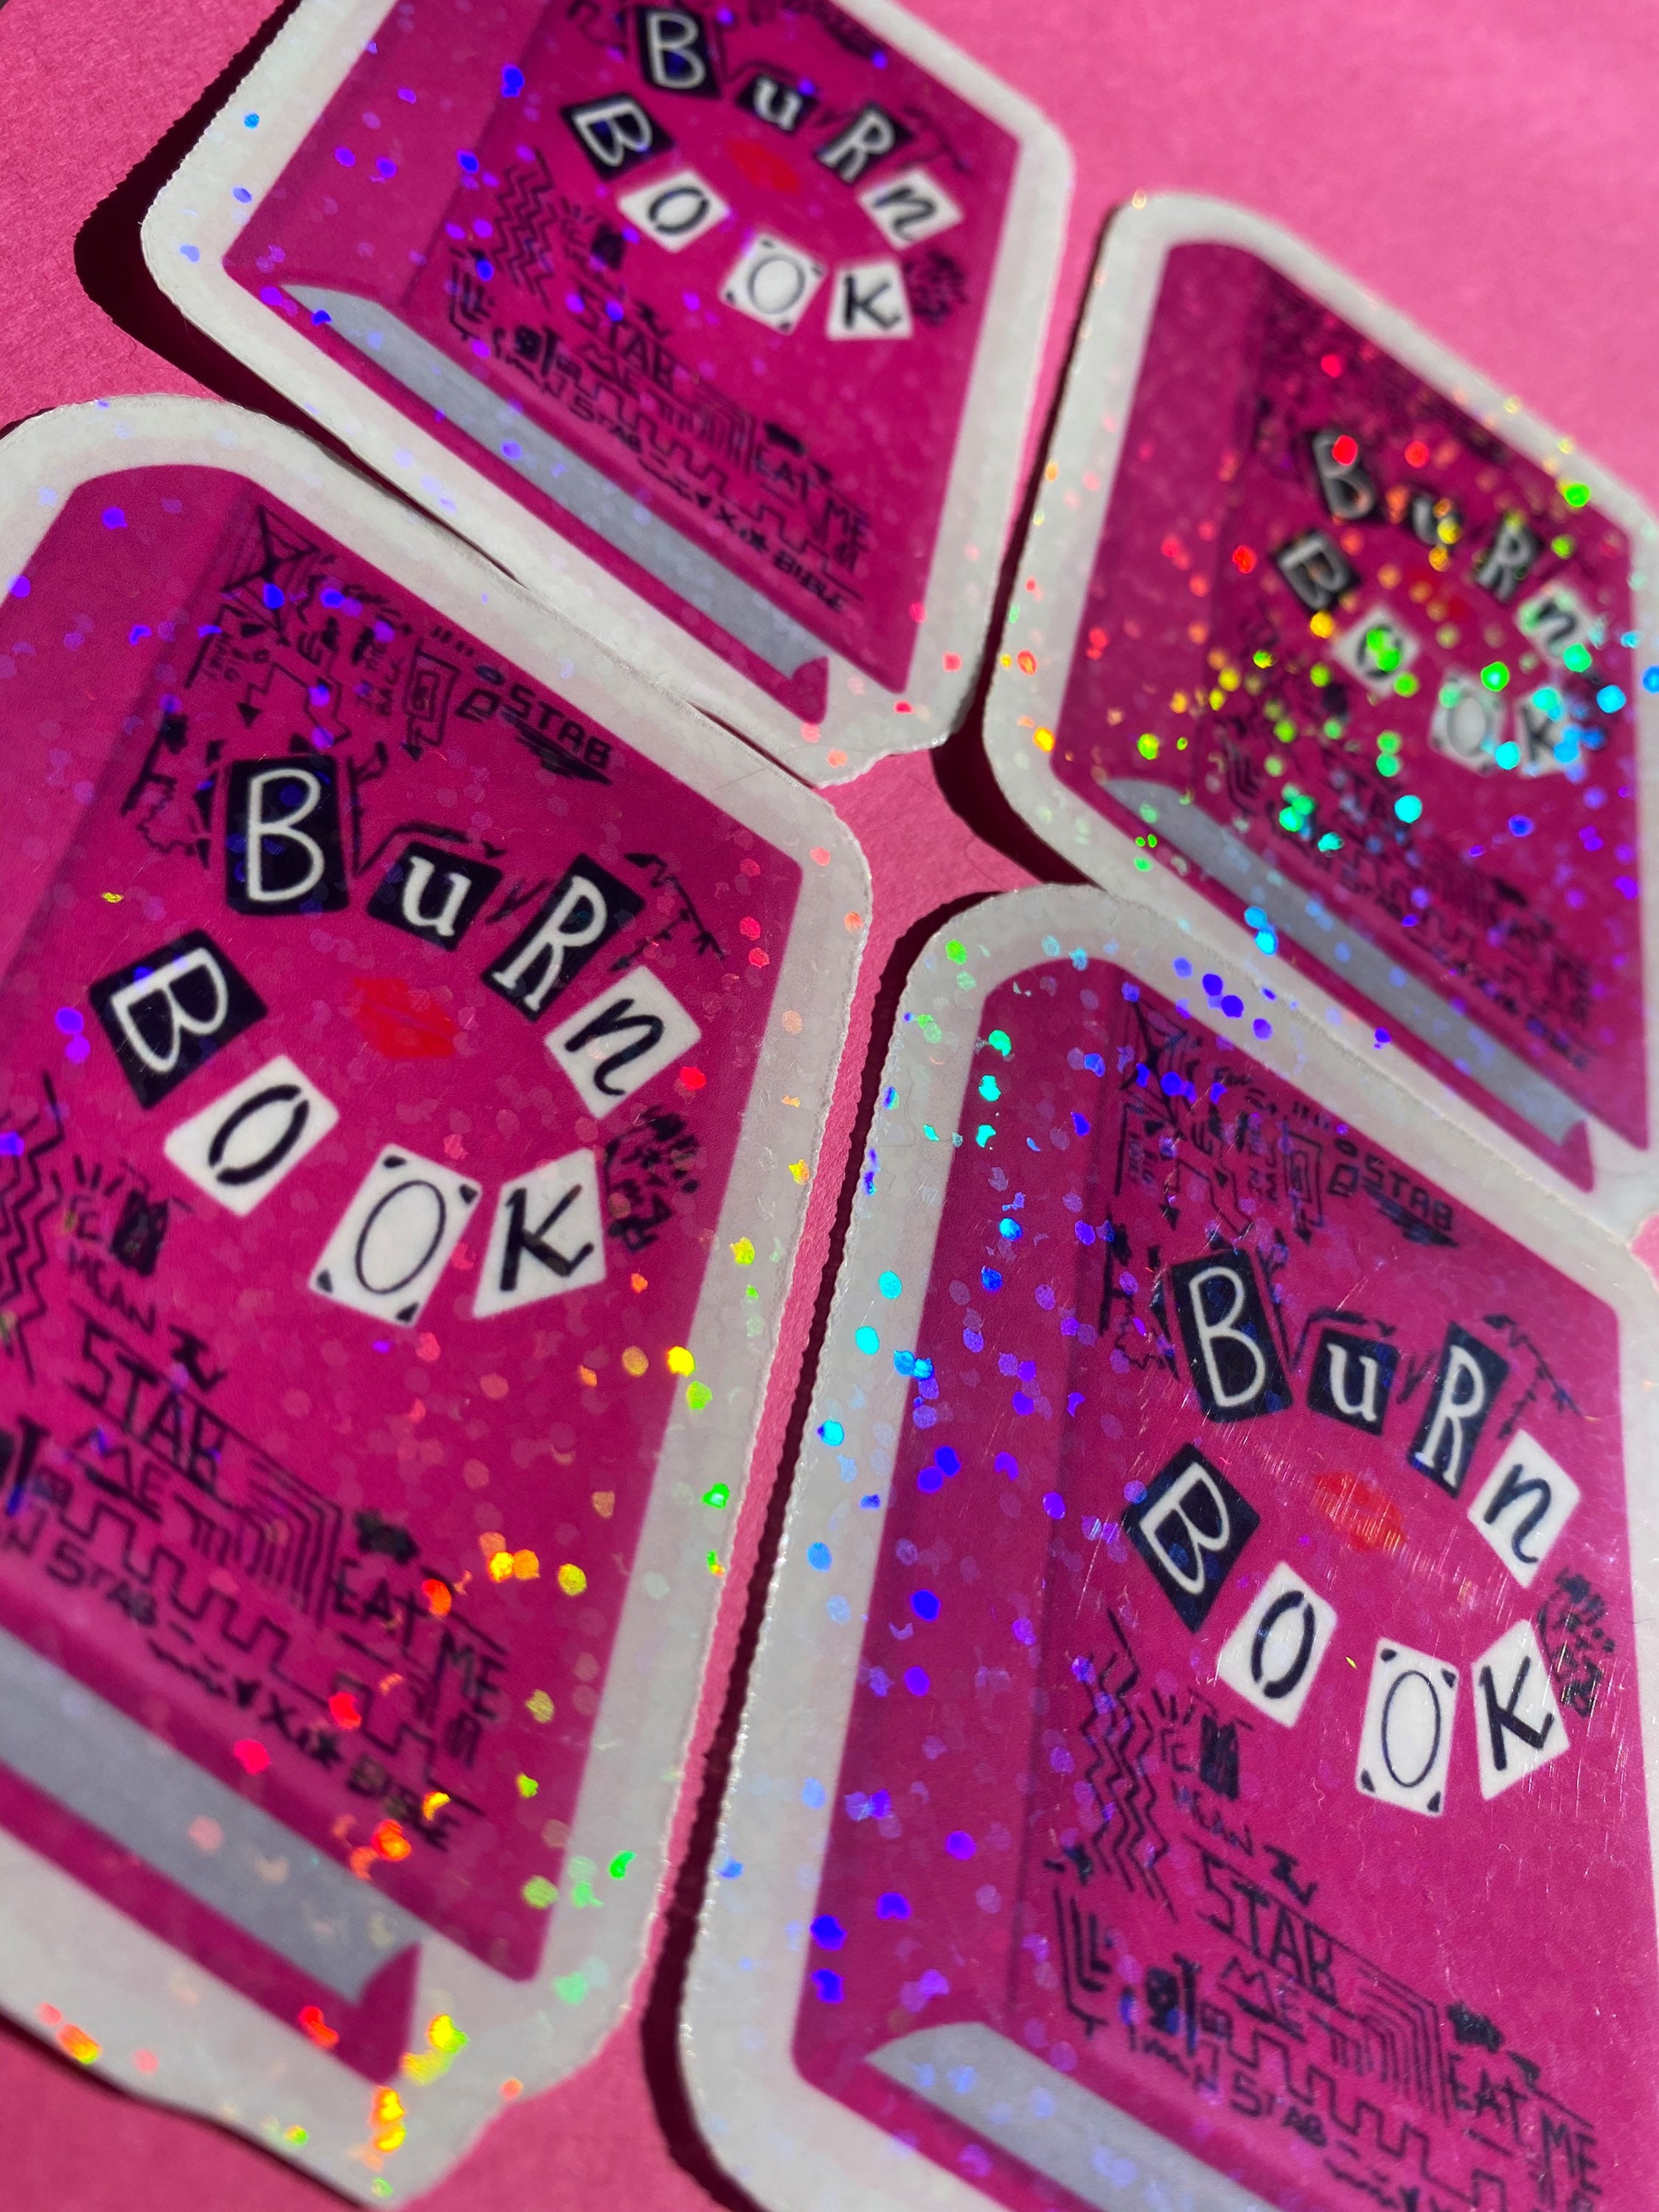 Burn Book sticker Sticker for Sale by xtheycallmemimi